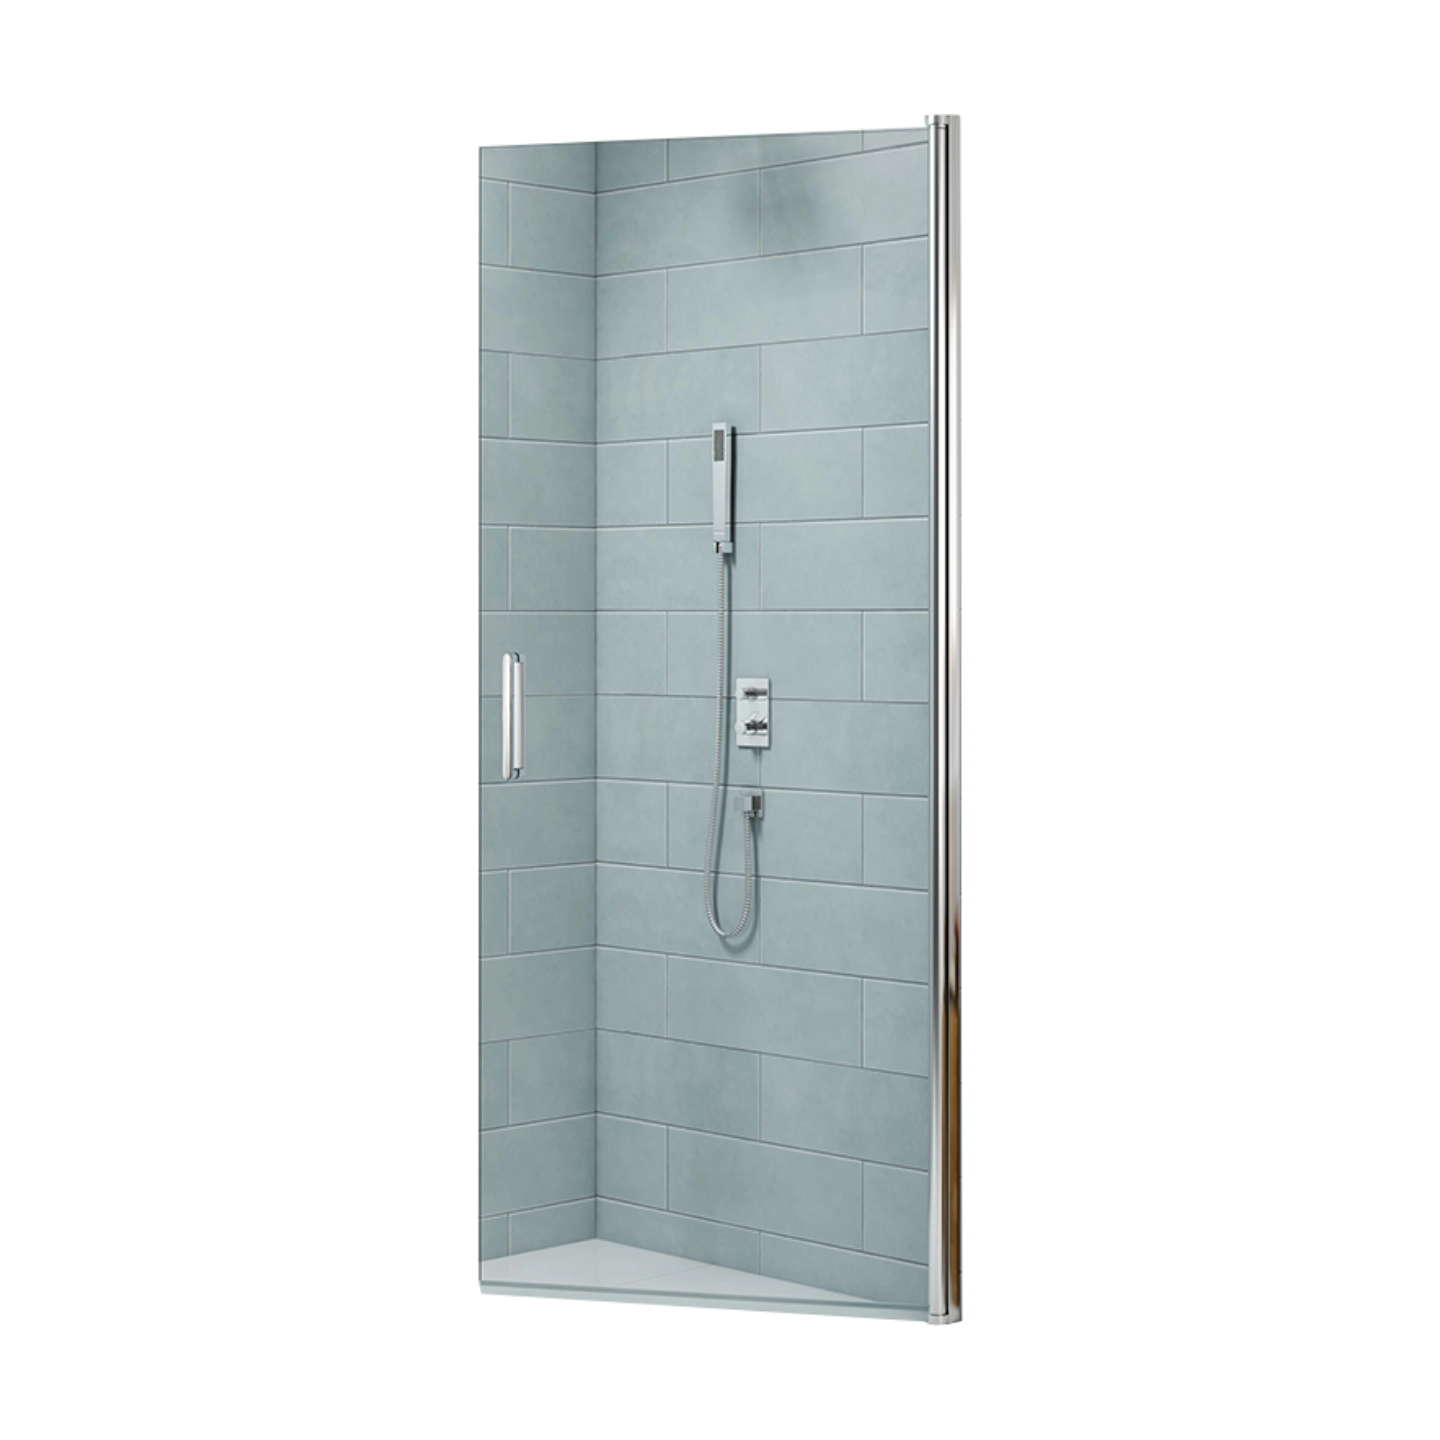 Merlyn 8 Series Frameless Pivot Shower Door Single, clear background image